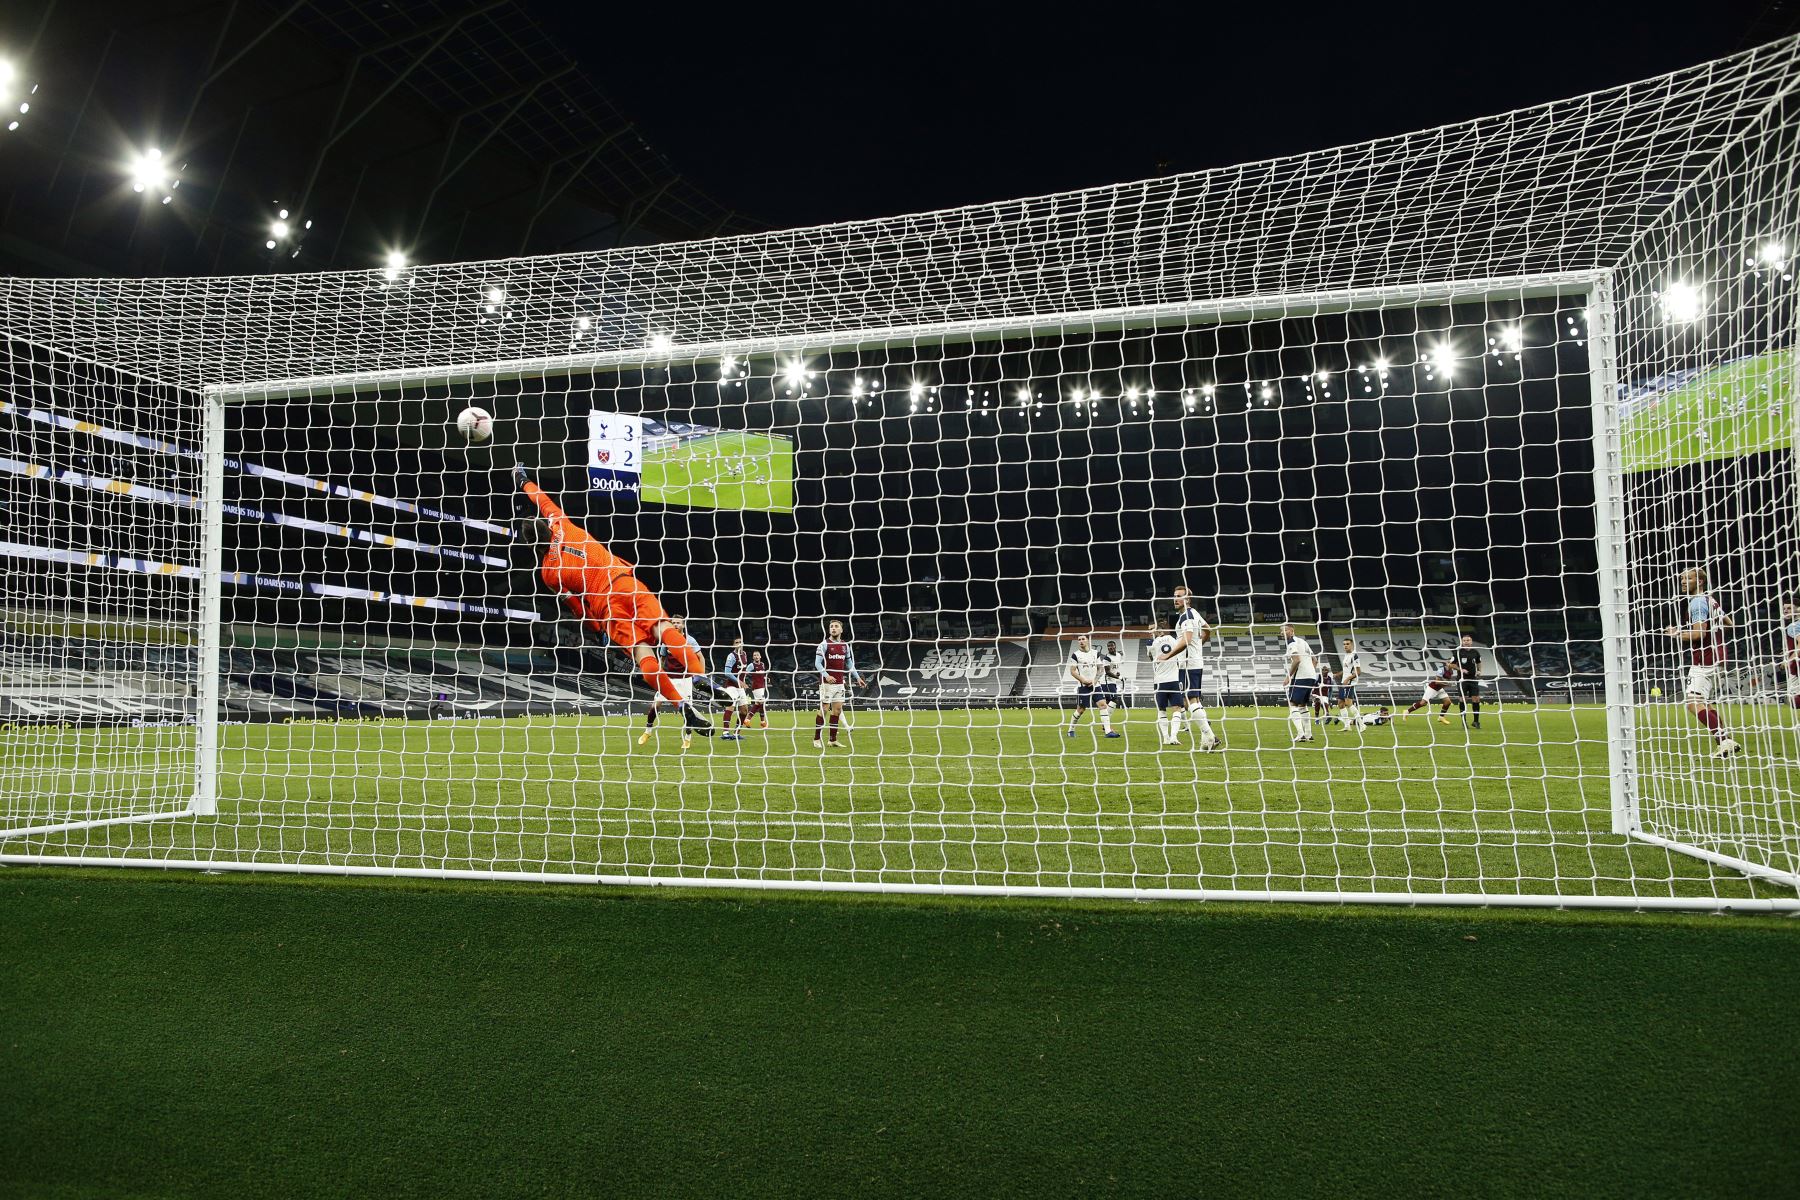 El portero francés del Tottenham Hotspur, Hugo Lloris, concede el tercer gol del mediocampista argentino del West Ham United, Manuel Lanzini, durante el partido de fútbol de la Premier League. Foto: AFP